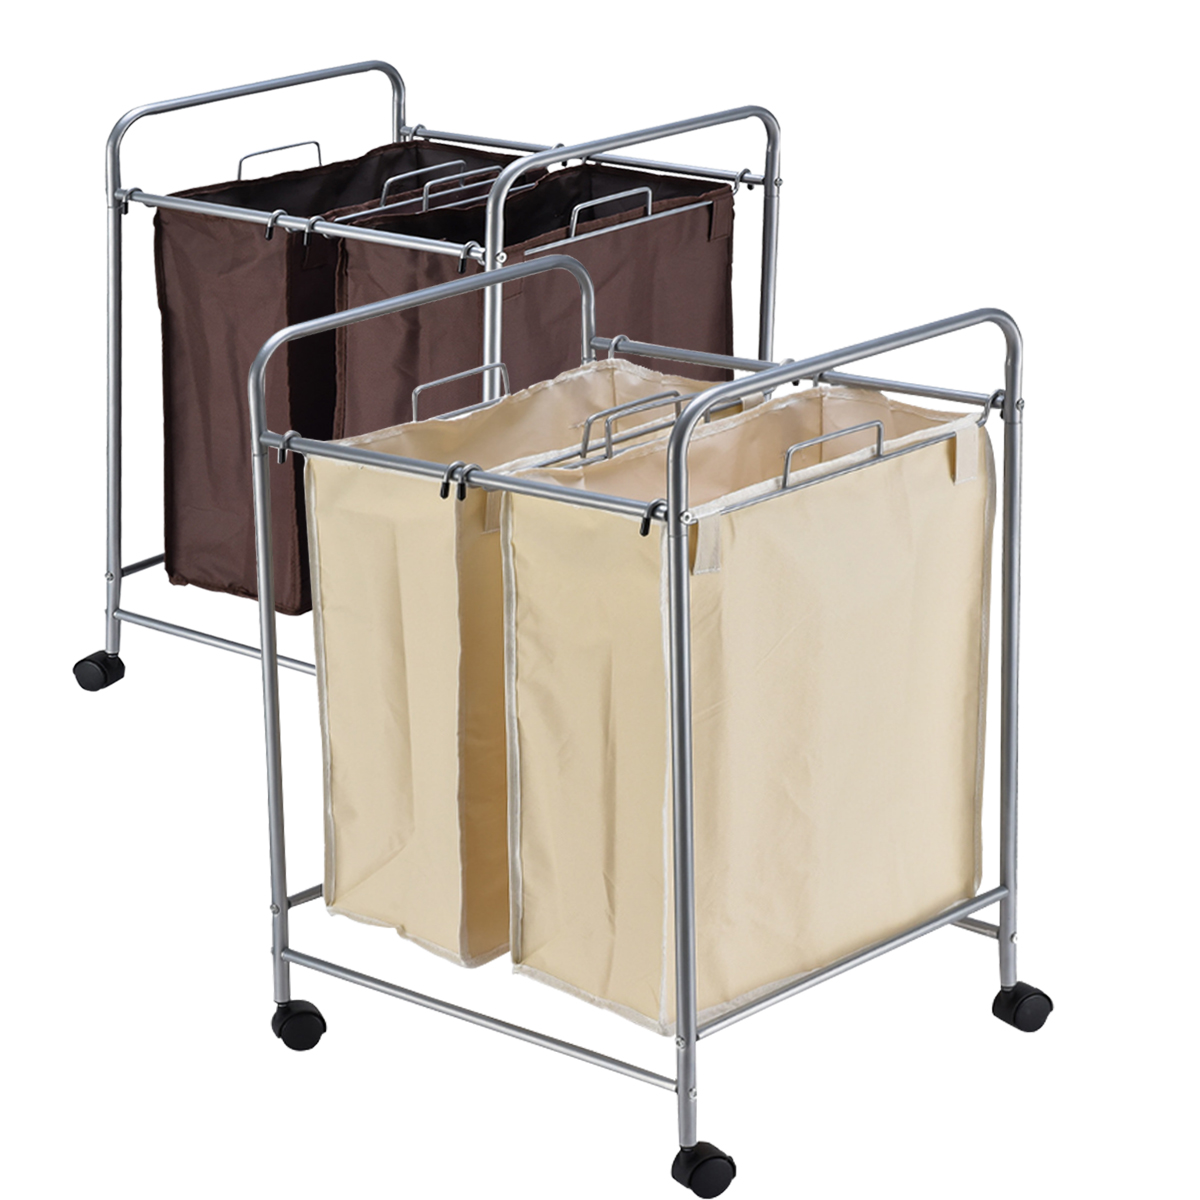 Multifunction-Mobile-Double-Bag-Compact-Laundry-Hamper-Sorter-Cart-Clothes-Storage-Bag-1554014